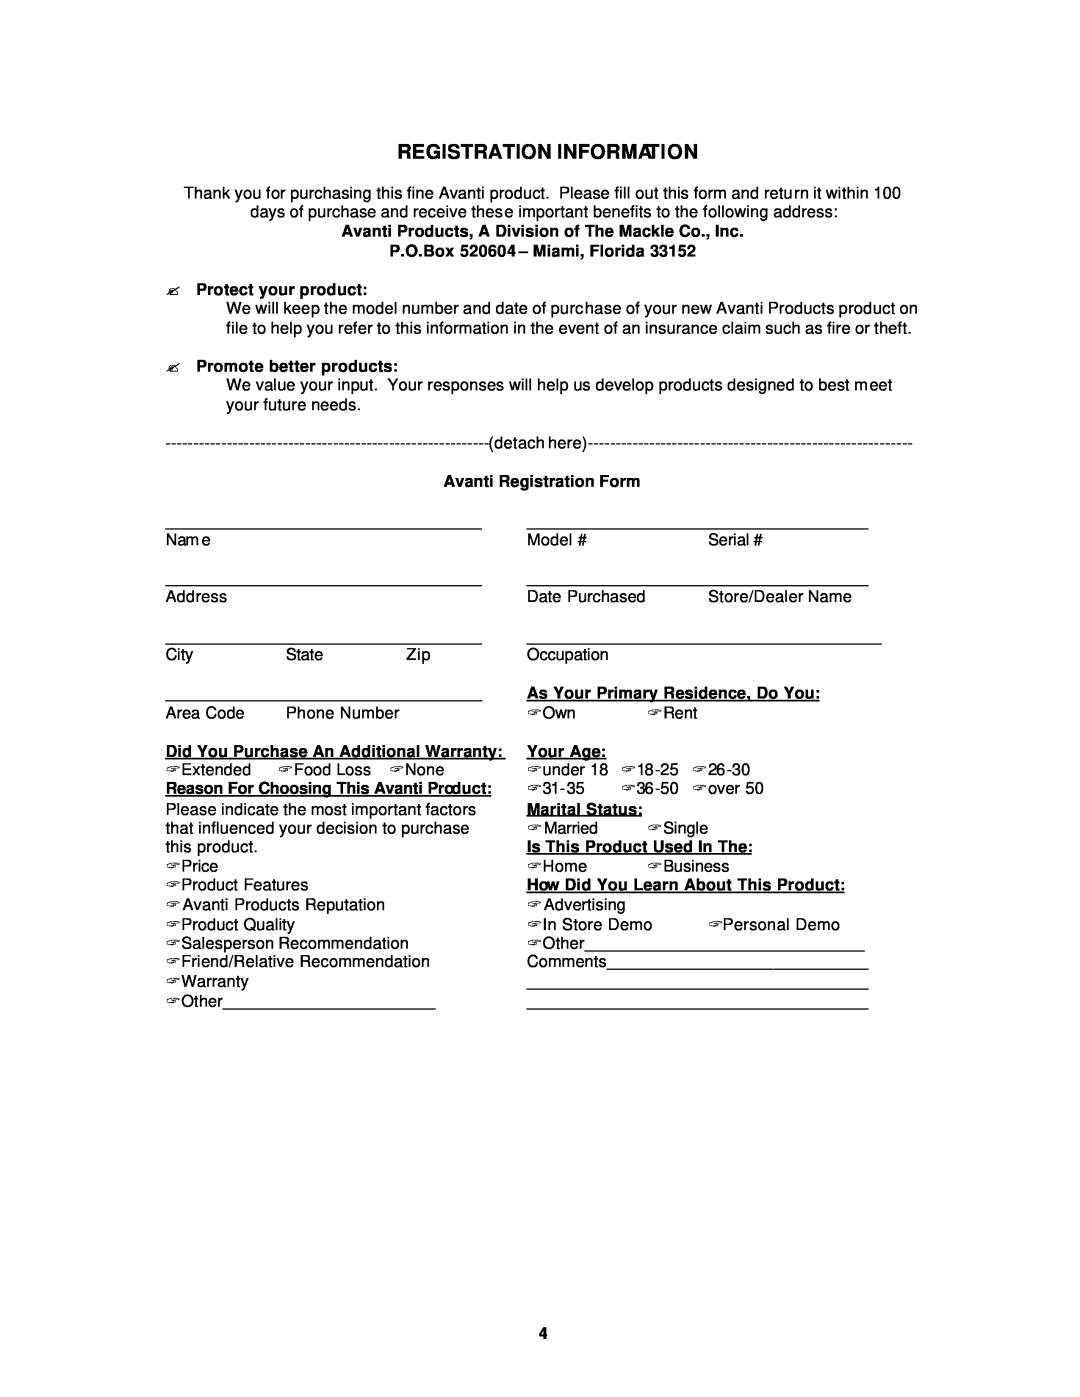 Avanti WC40D instruction manual Registration Information 